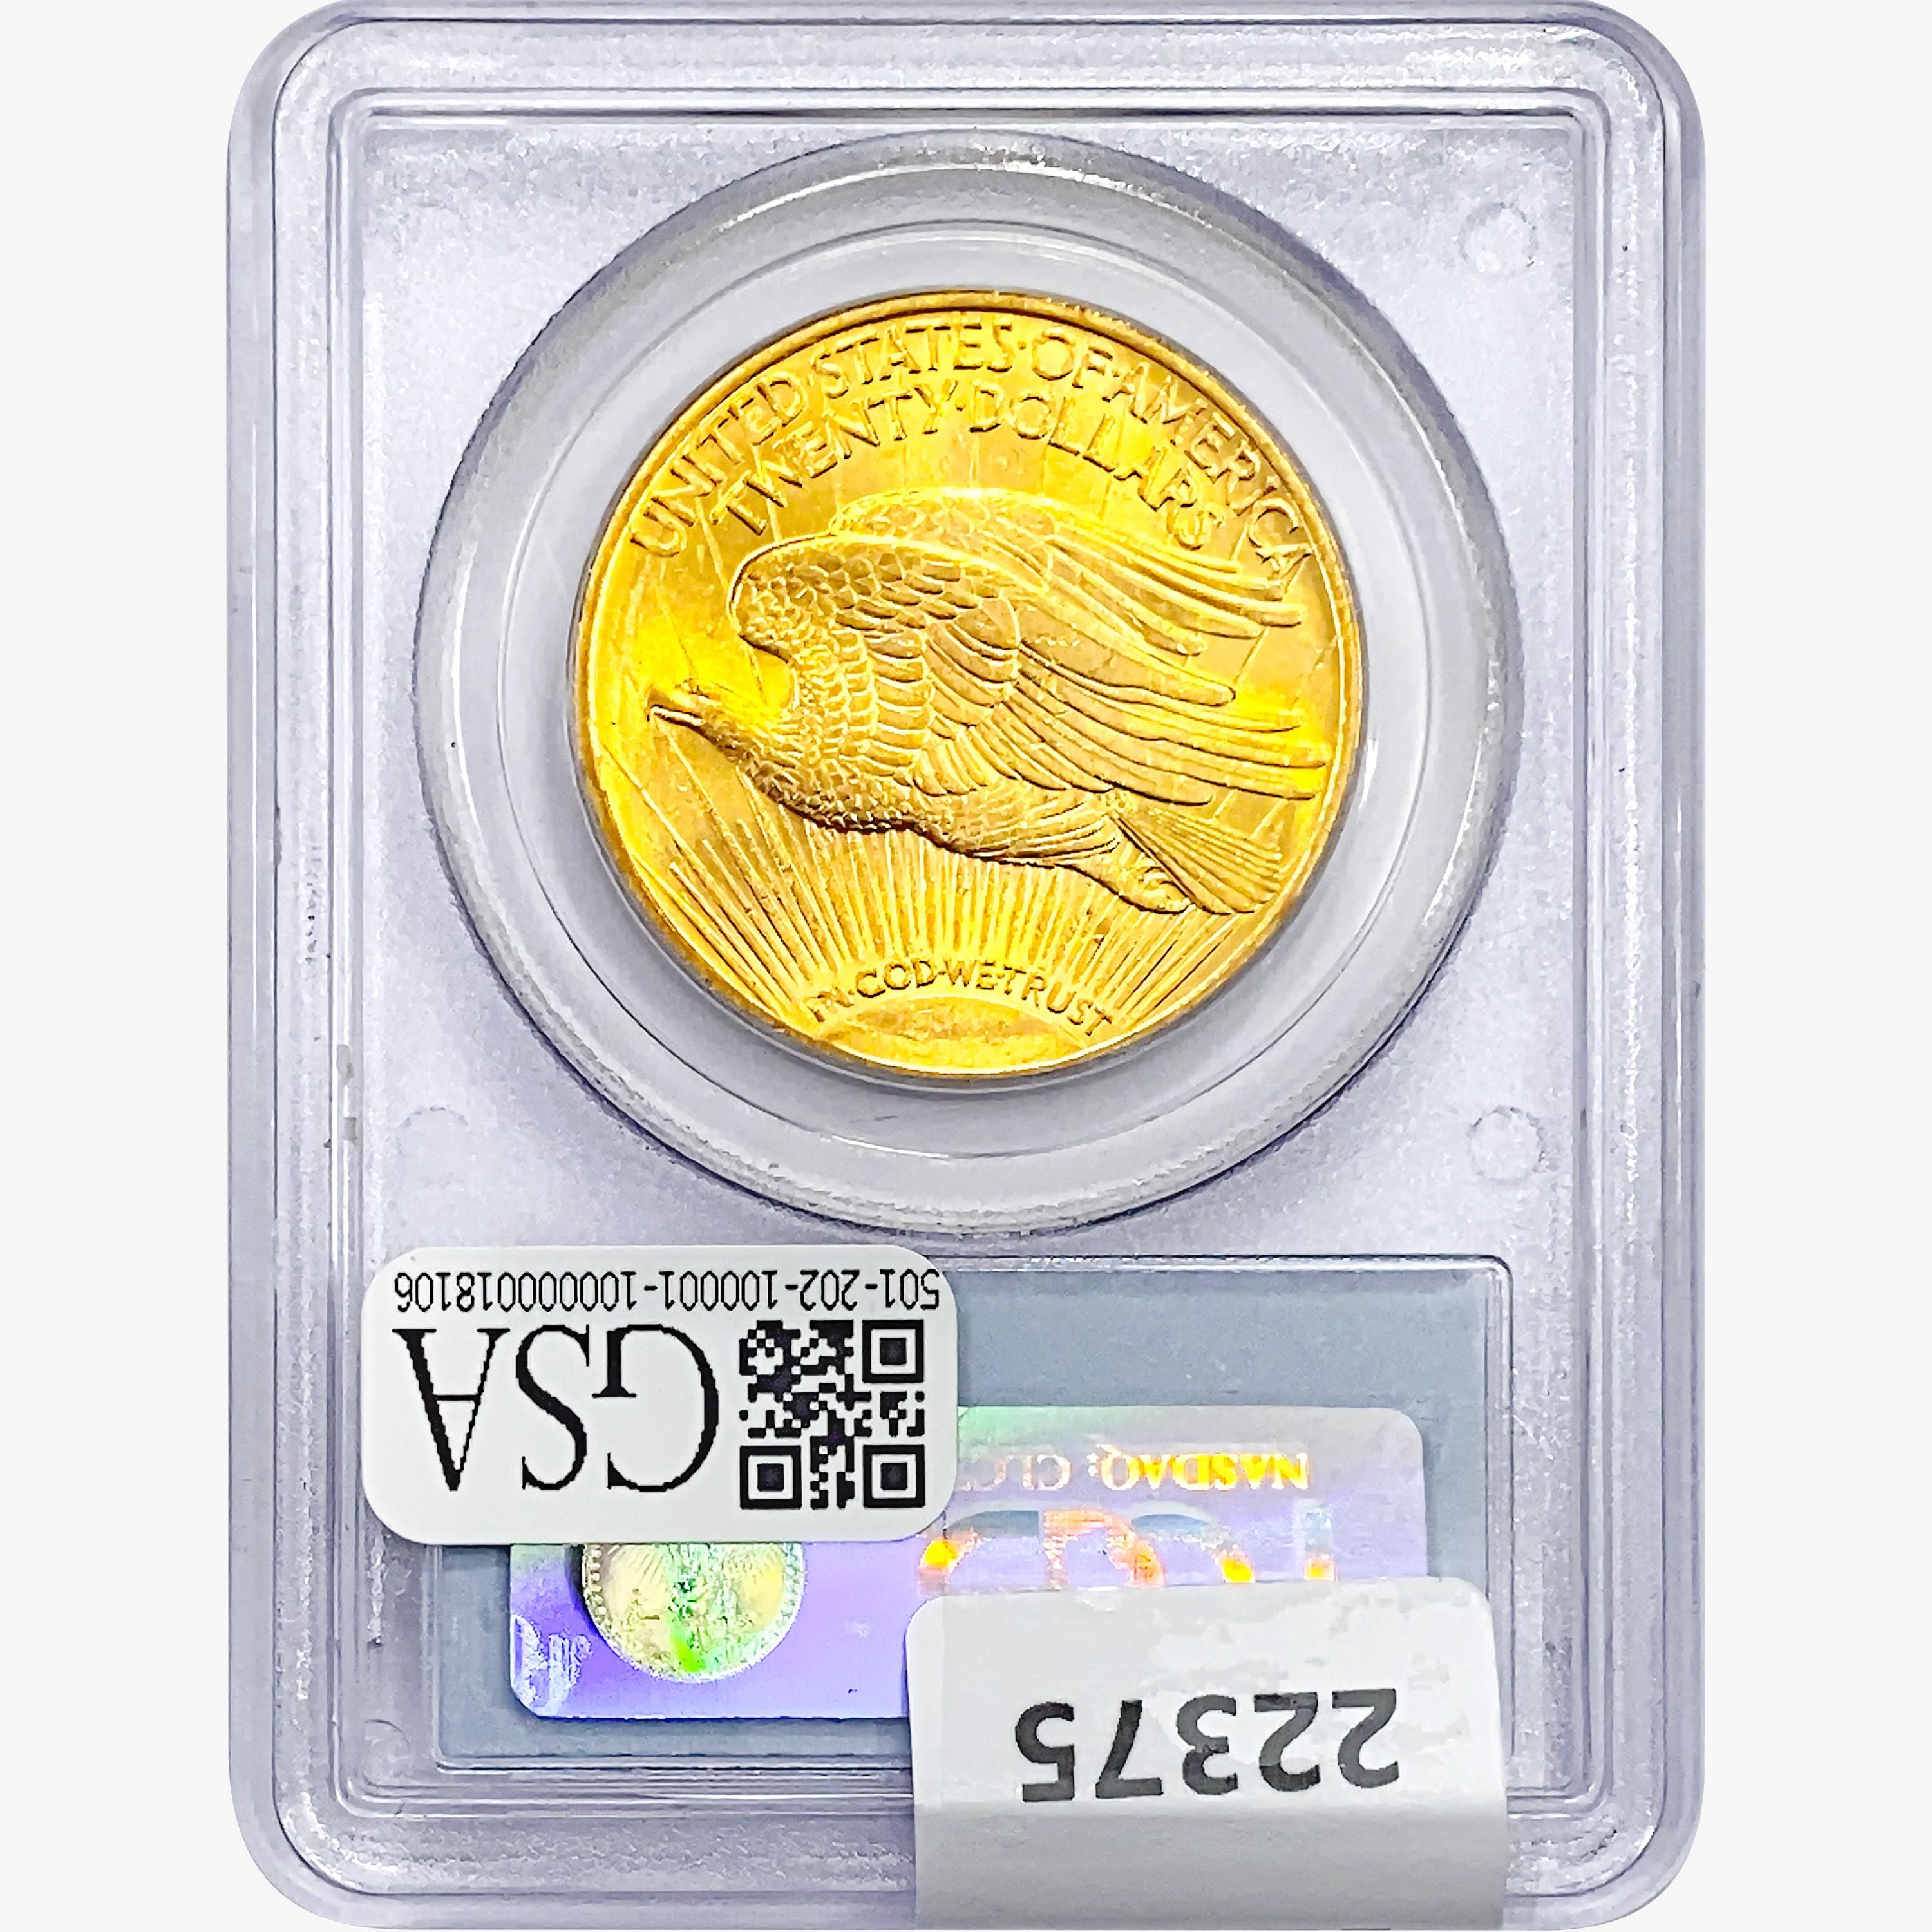 1922 $20 Gold Double Eagle PCGS MS63